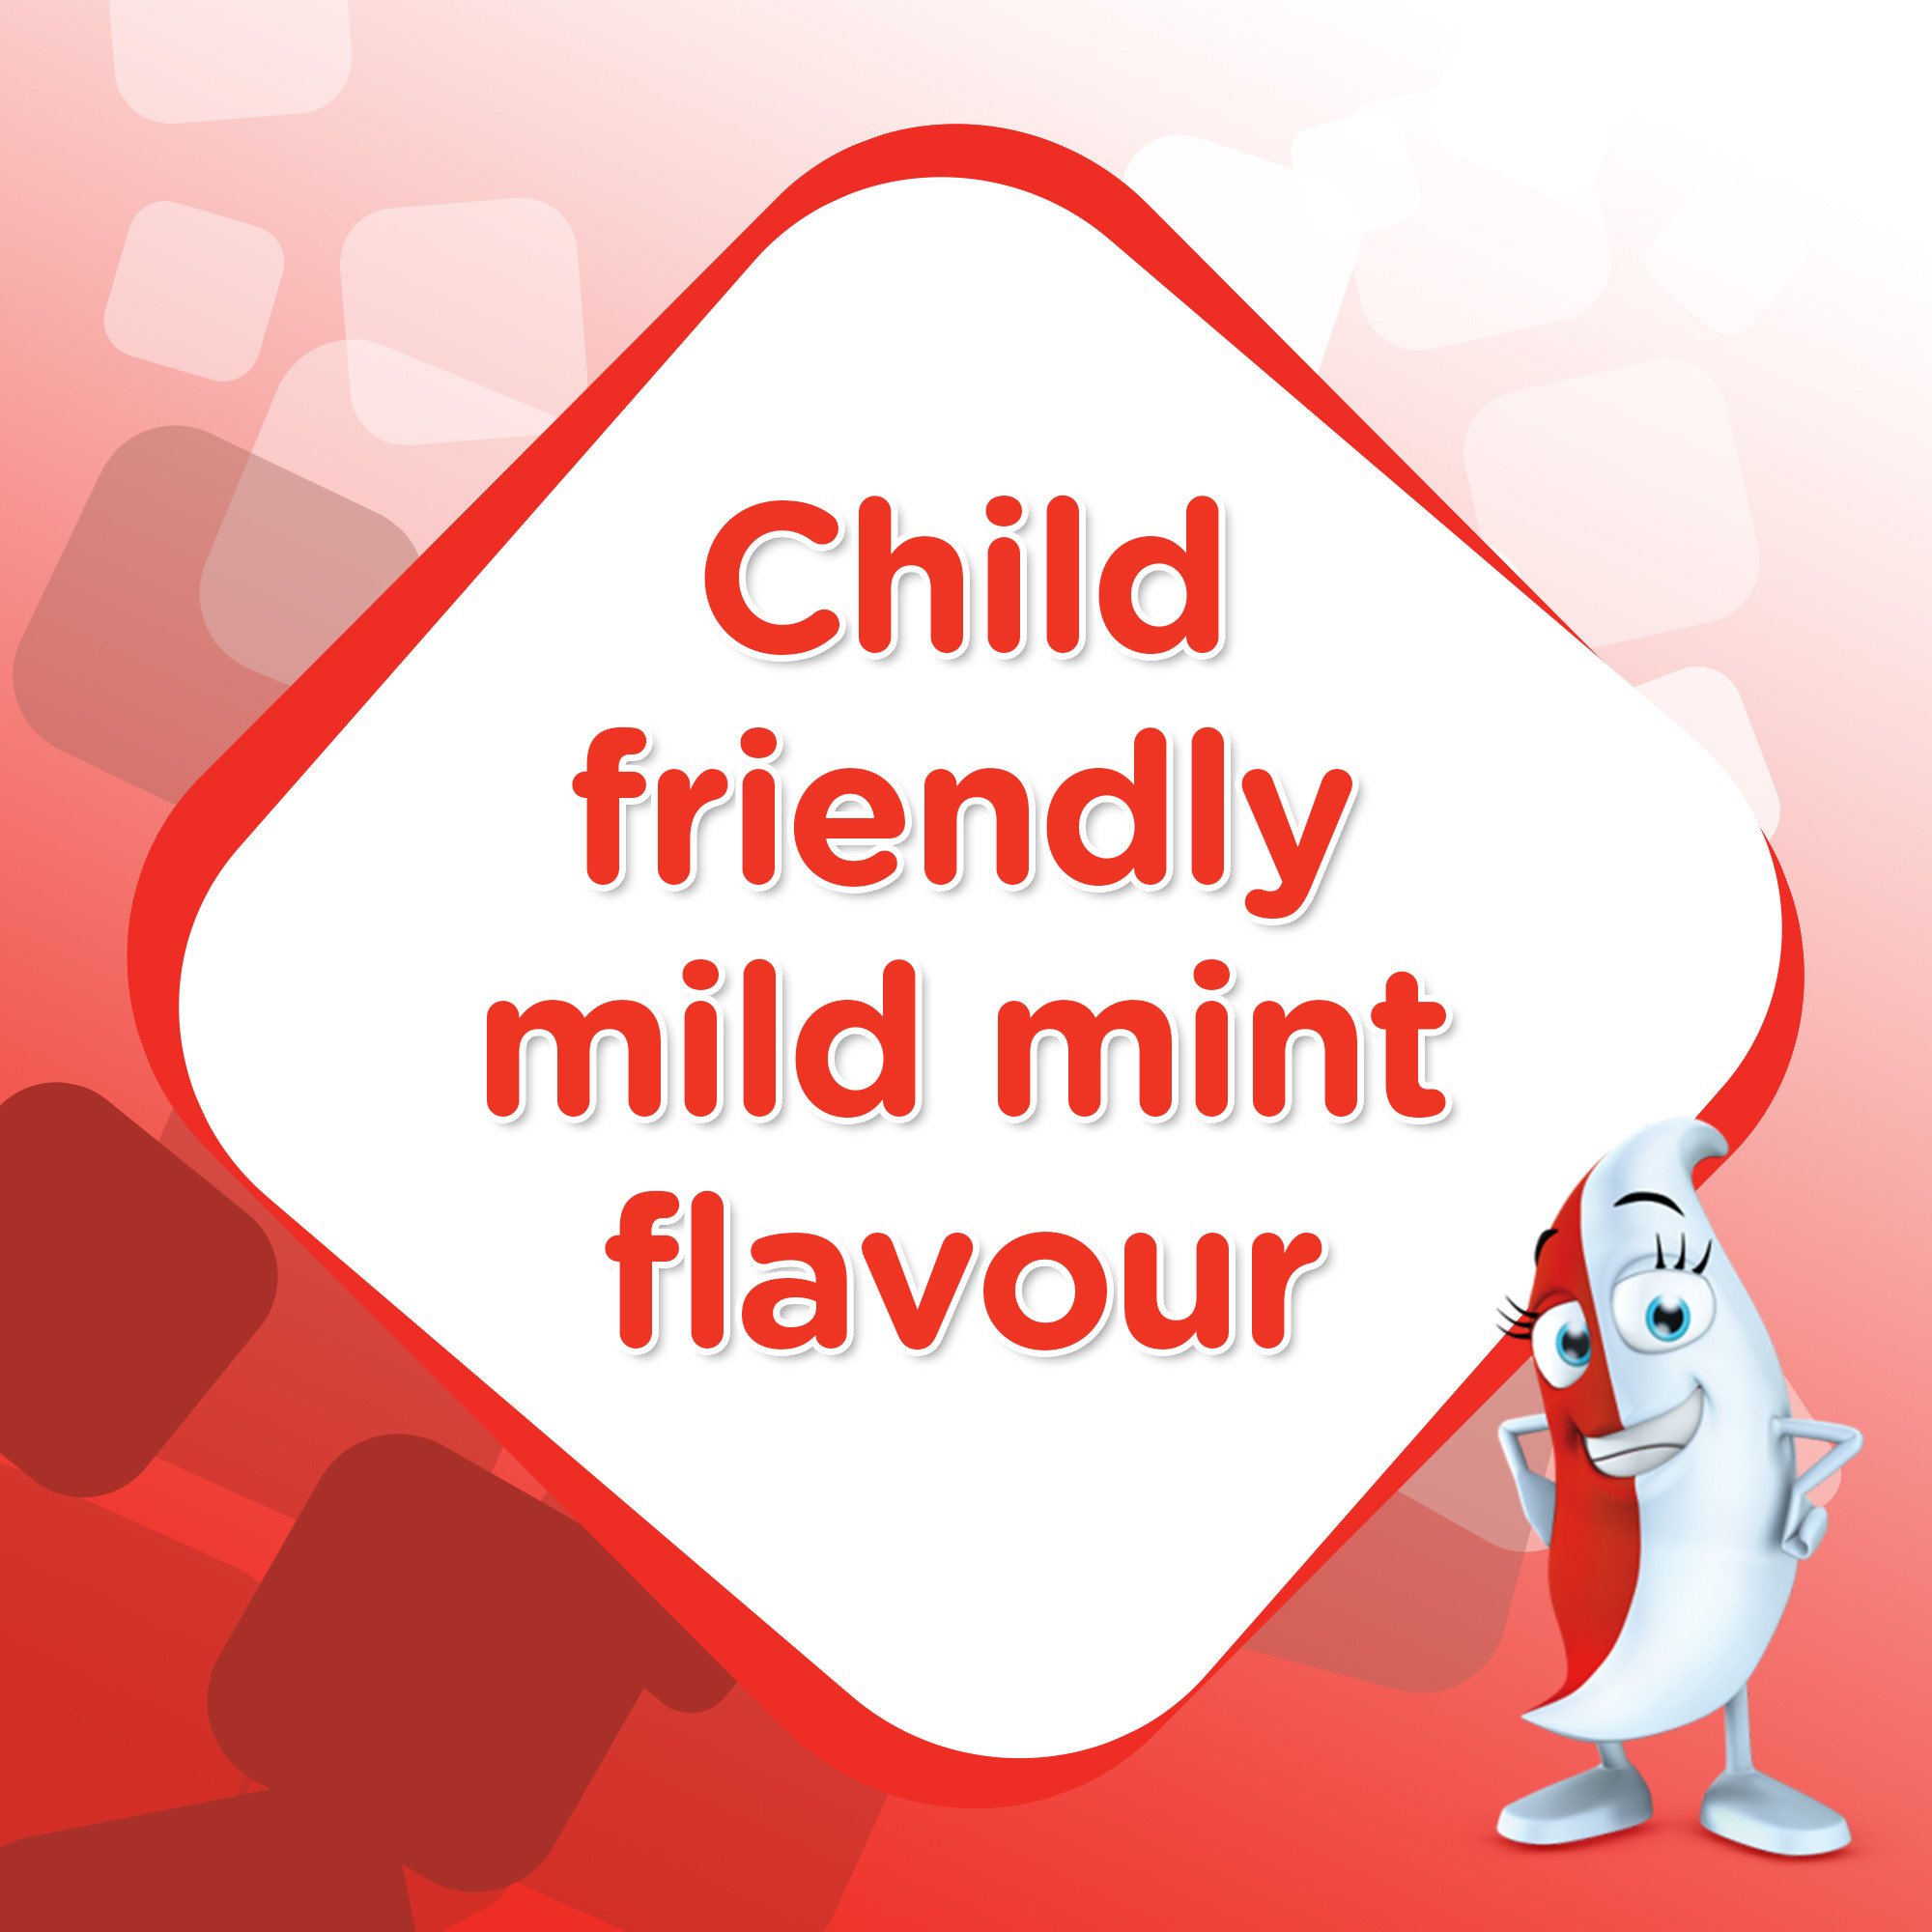 Aquafresh Kids Cavity Protection Fluoride Toothpaste Pump, Bubble Mint, 4.6 oz - image 8 of 8